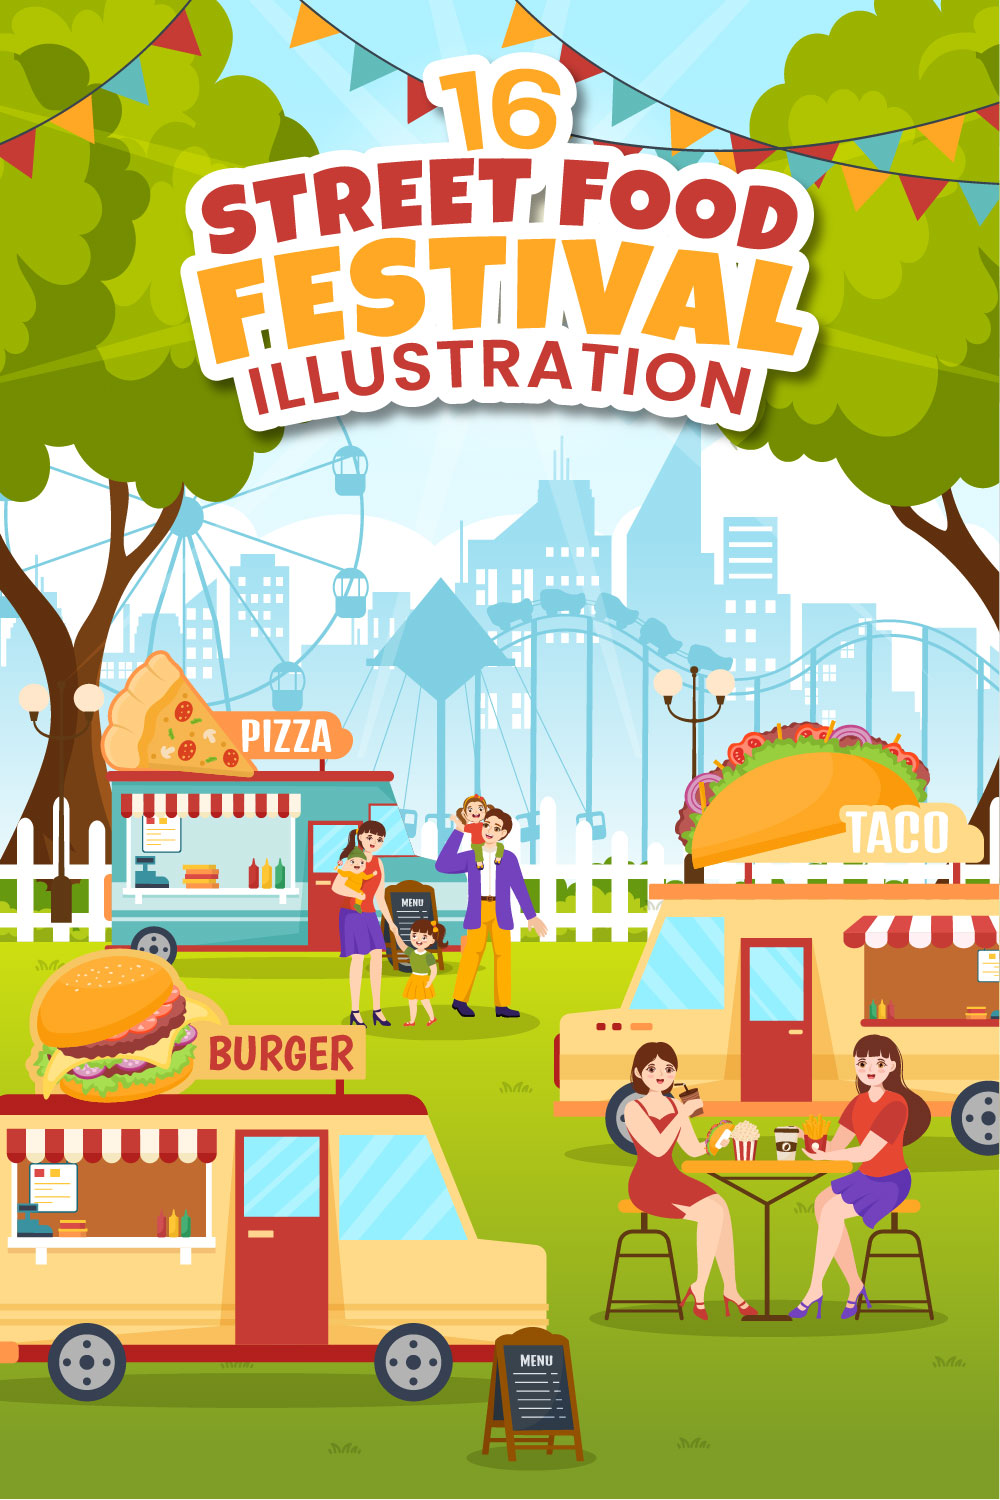 16 Street Food Festival Event Illustration pinterest preview image.